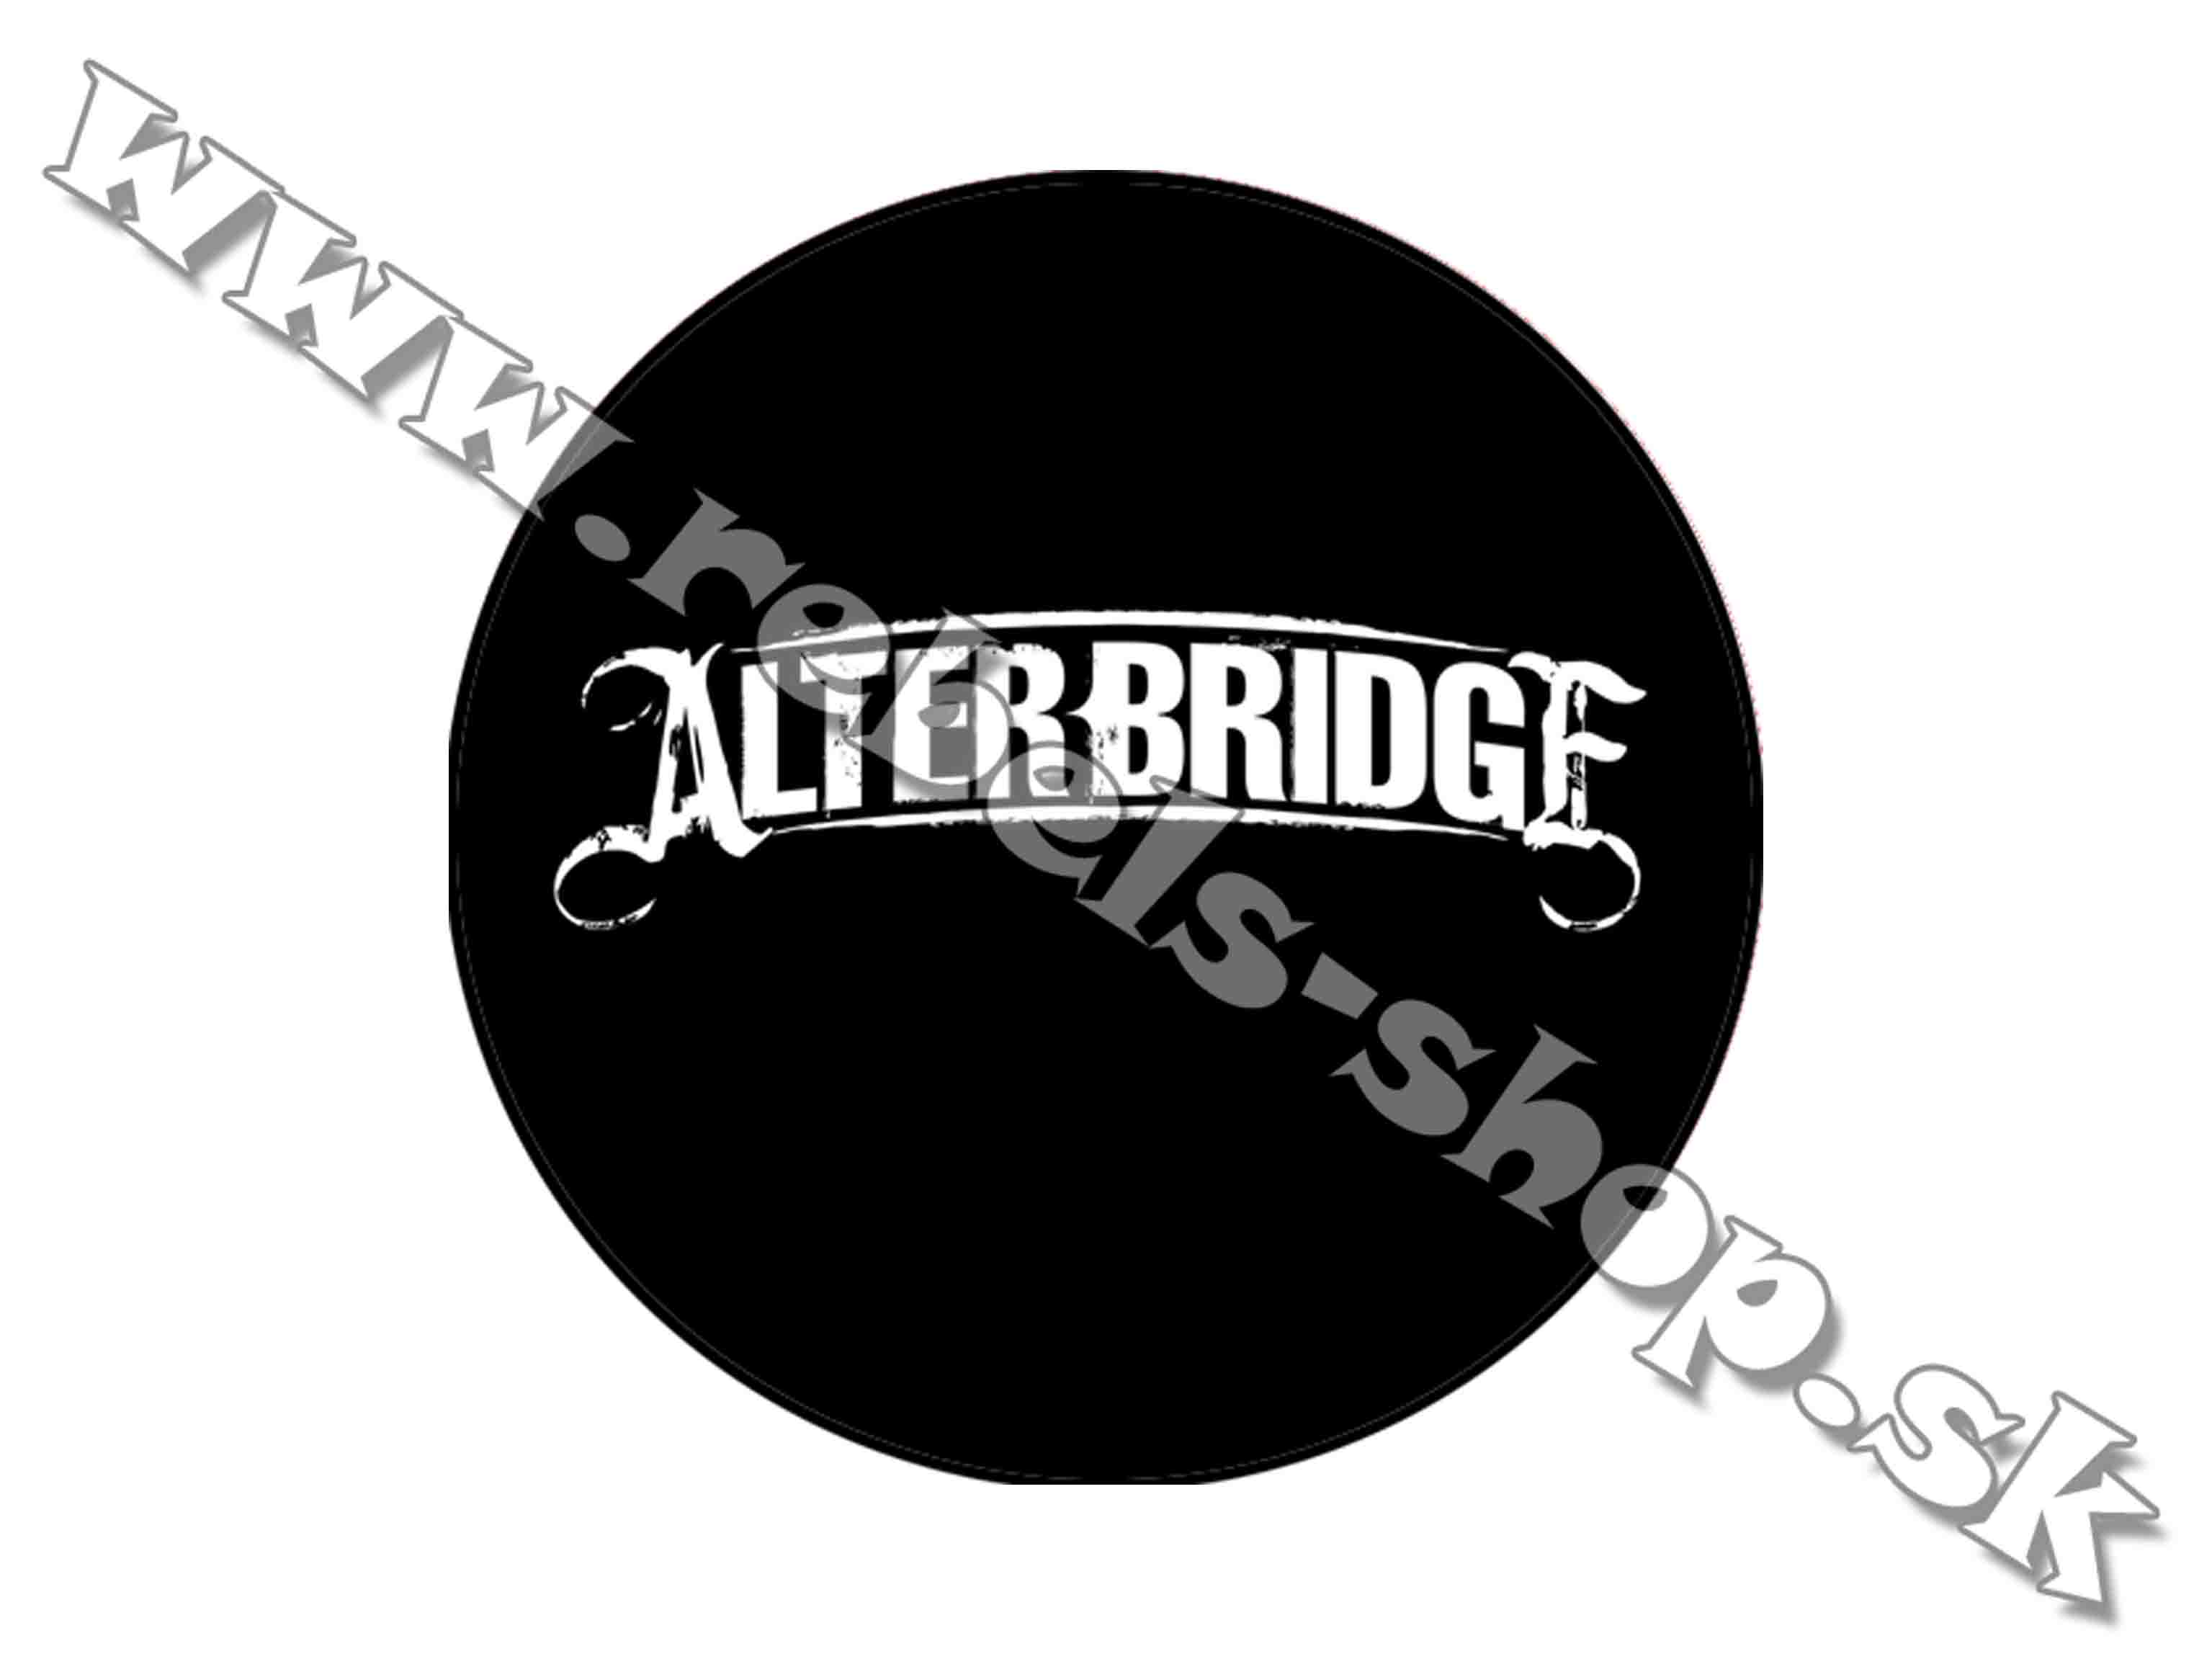 Odznak "Alter Bridge"